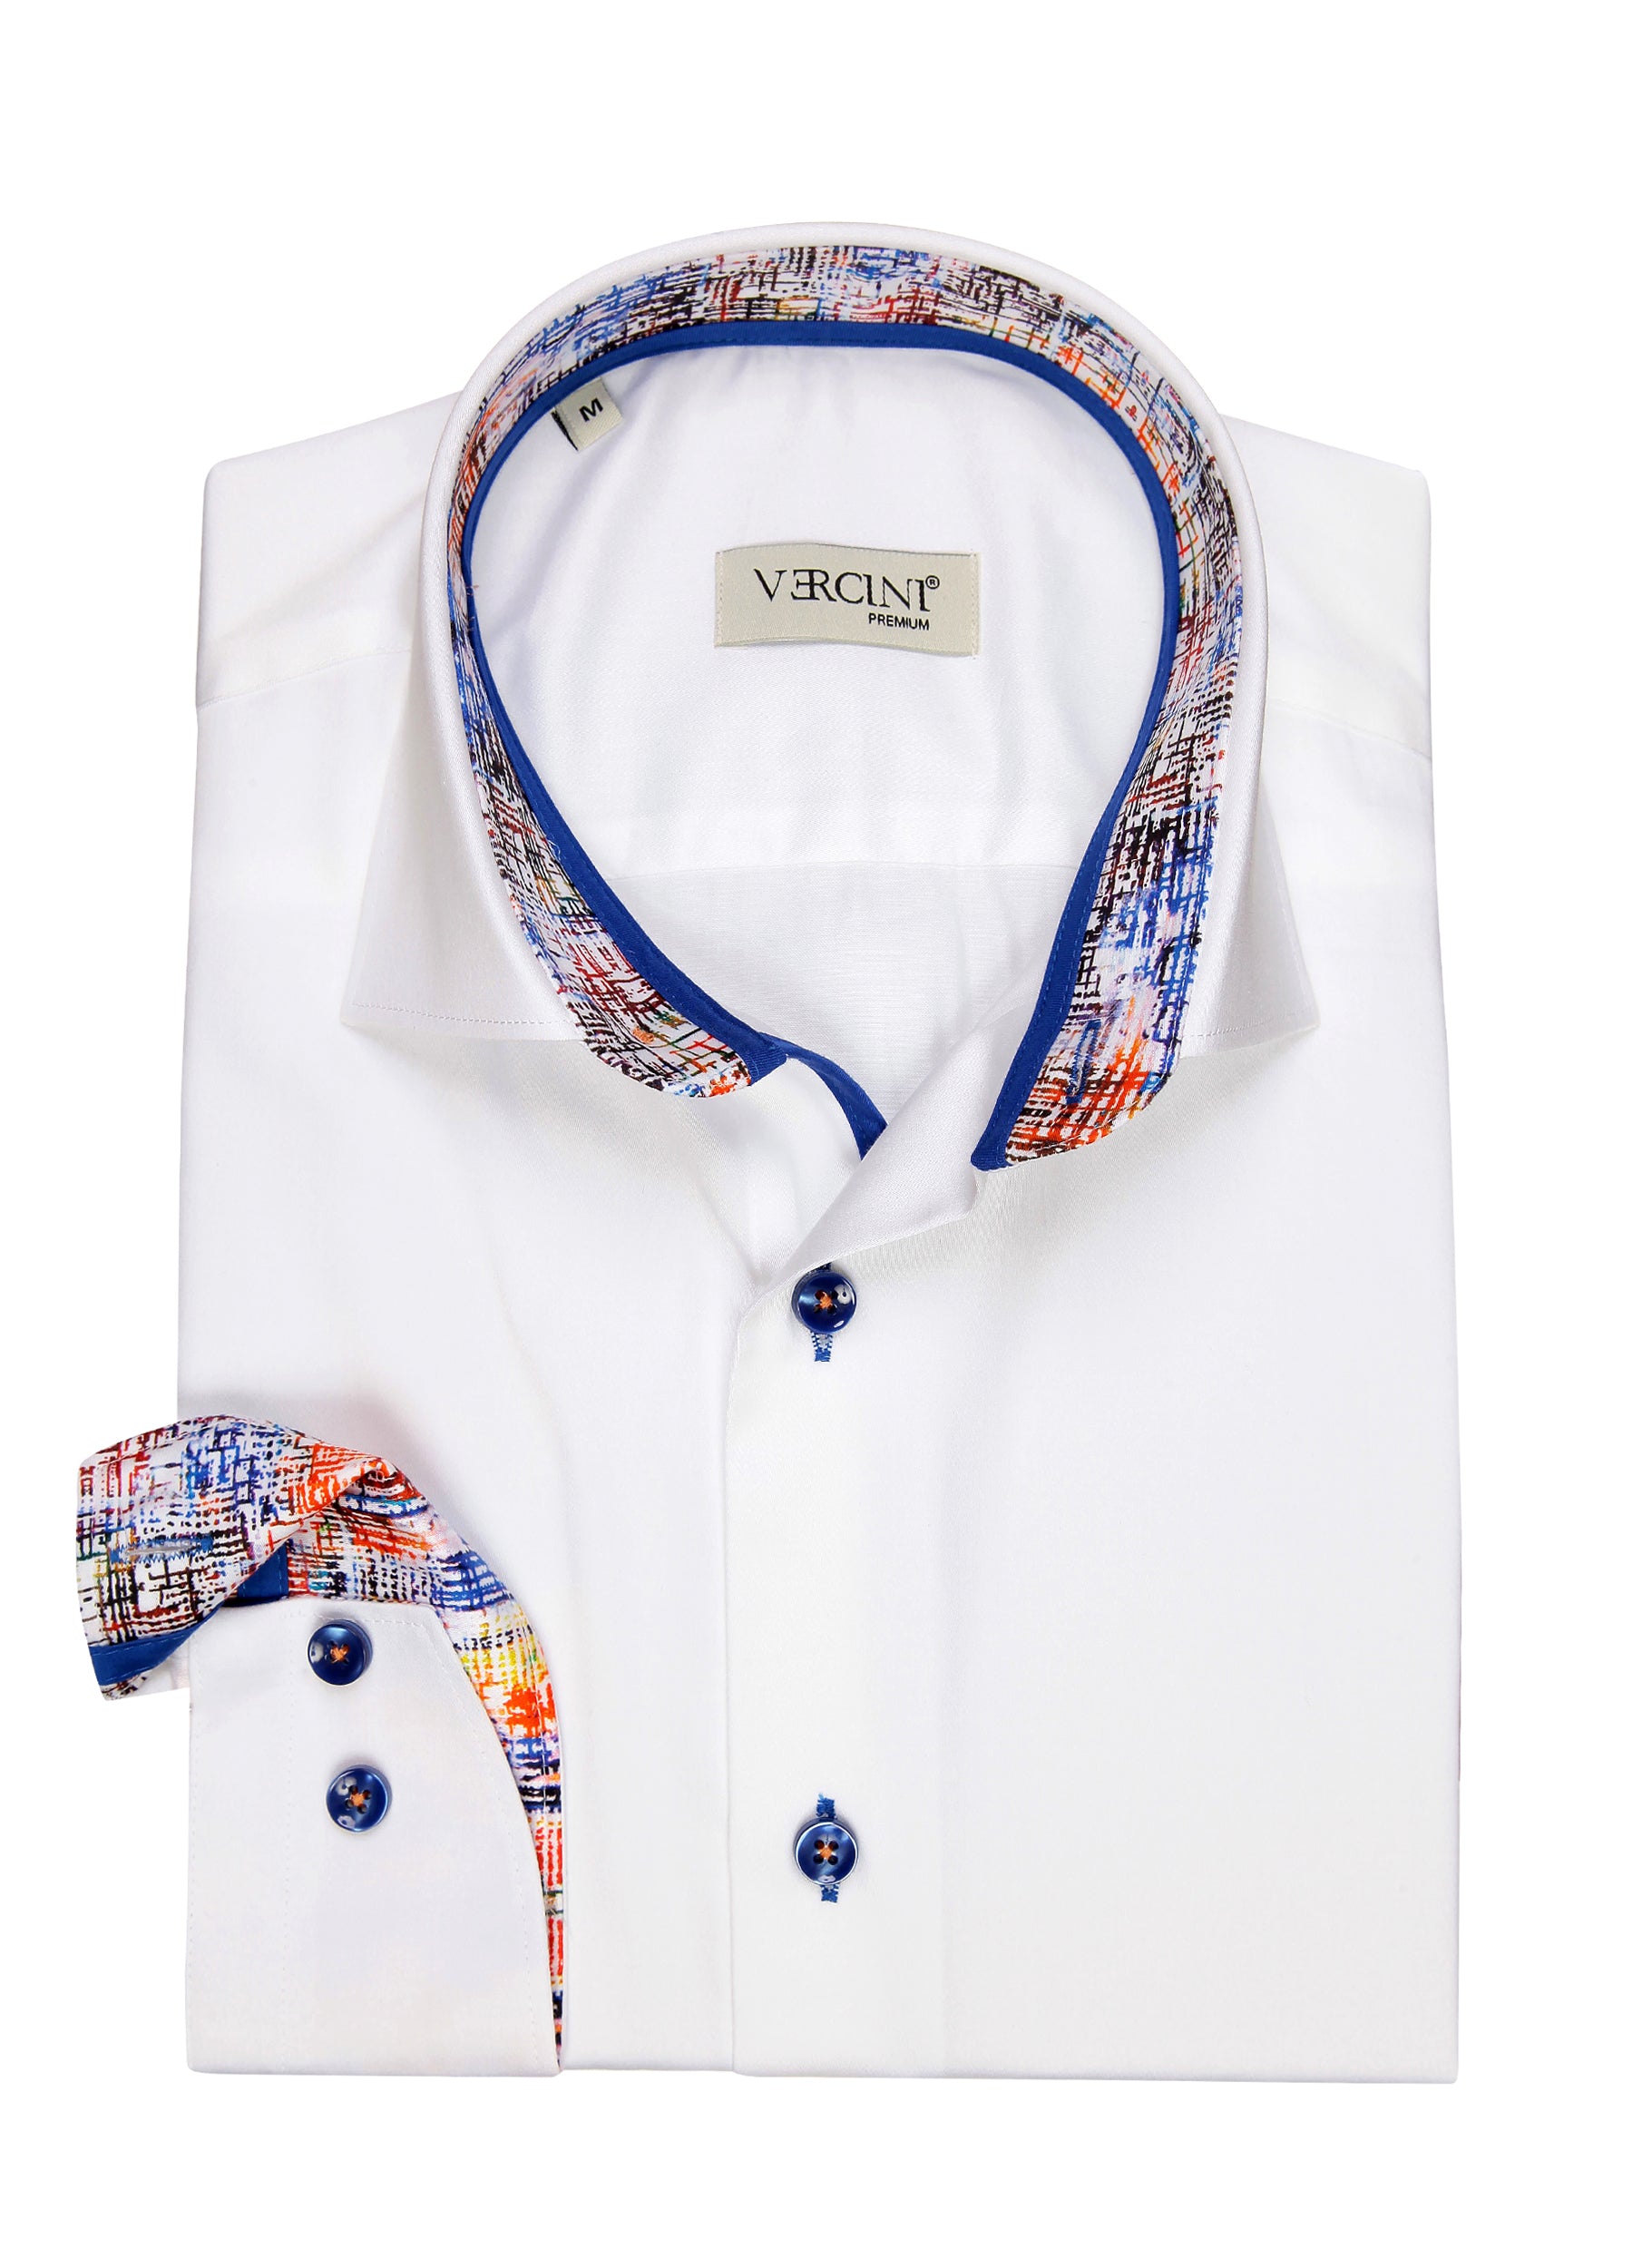 WHITE SHIRT VERCINI DRESS SHIRTS On Sale 30% Off Vercini